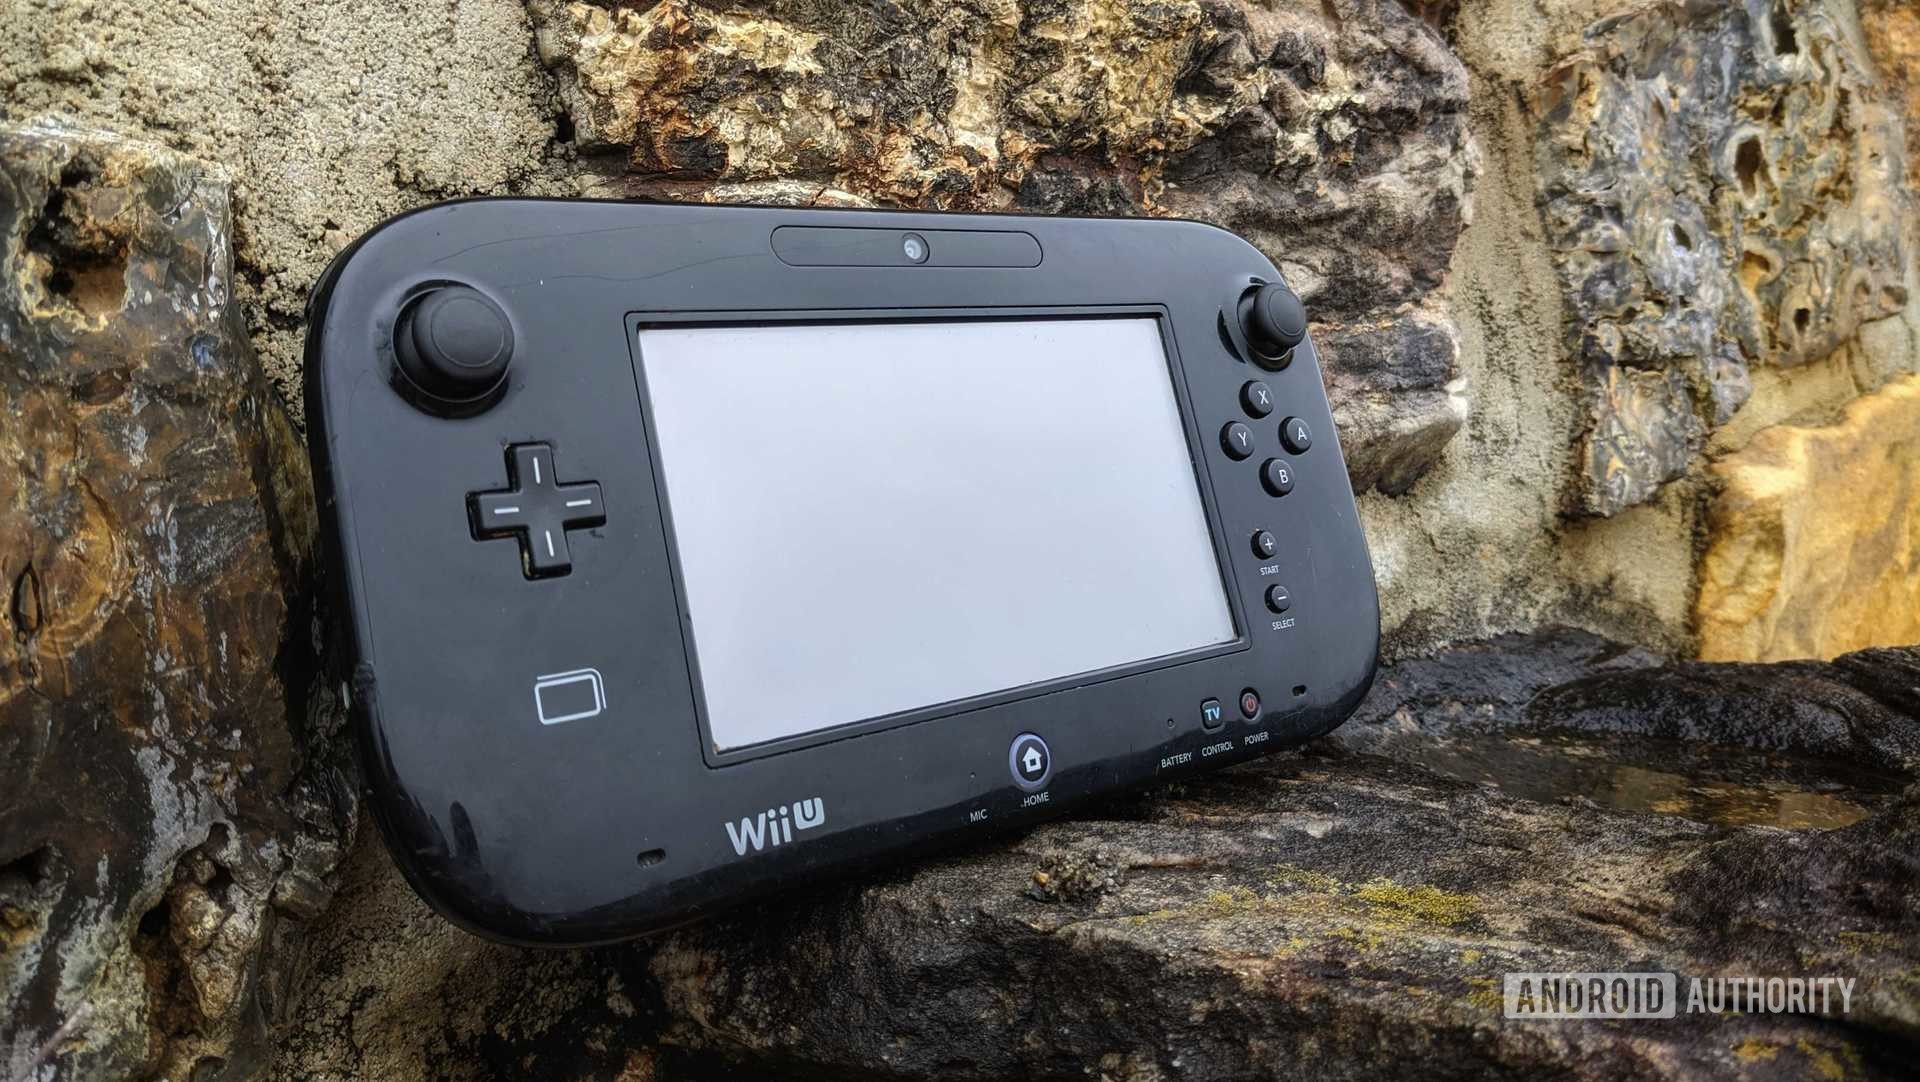 Nintendo 3DS and Wii U eShop shutdown erases a chunk of gaming history